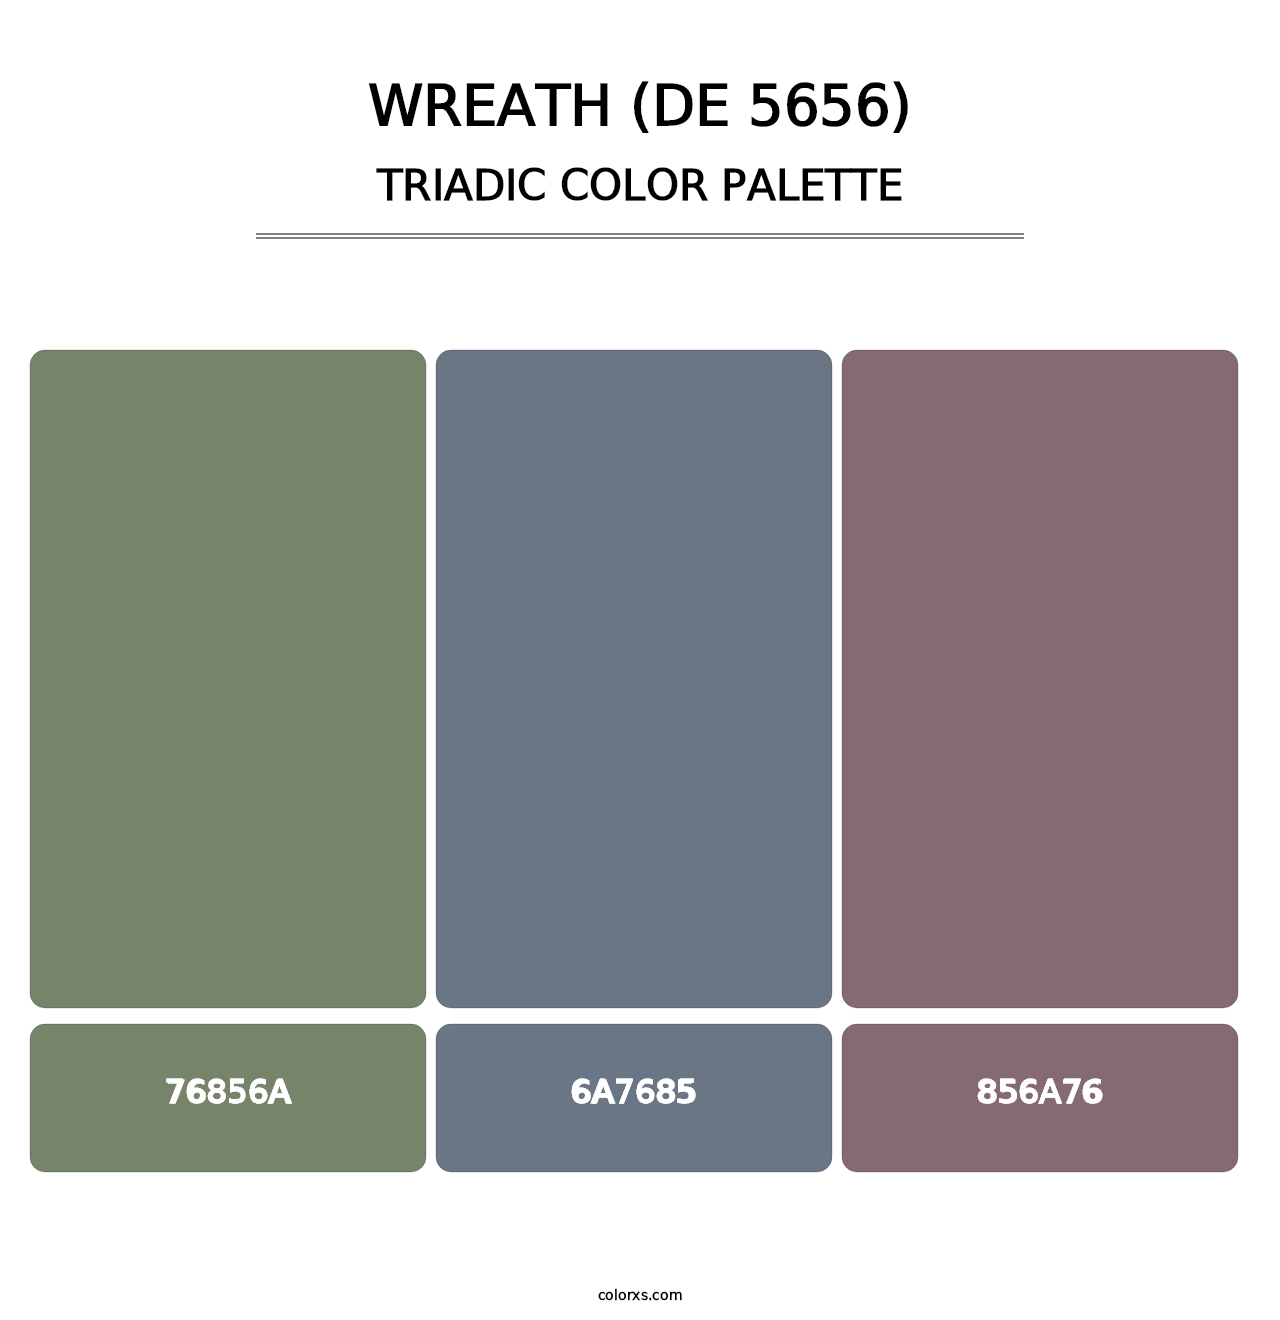 Wreath (DE 5656) - Triadic Color Palette